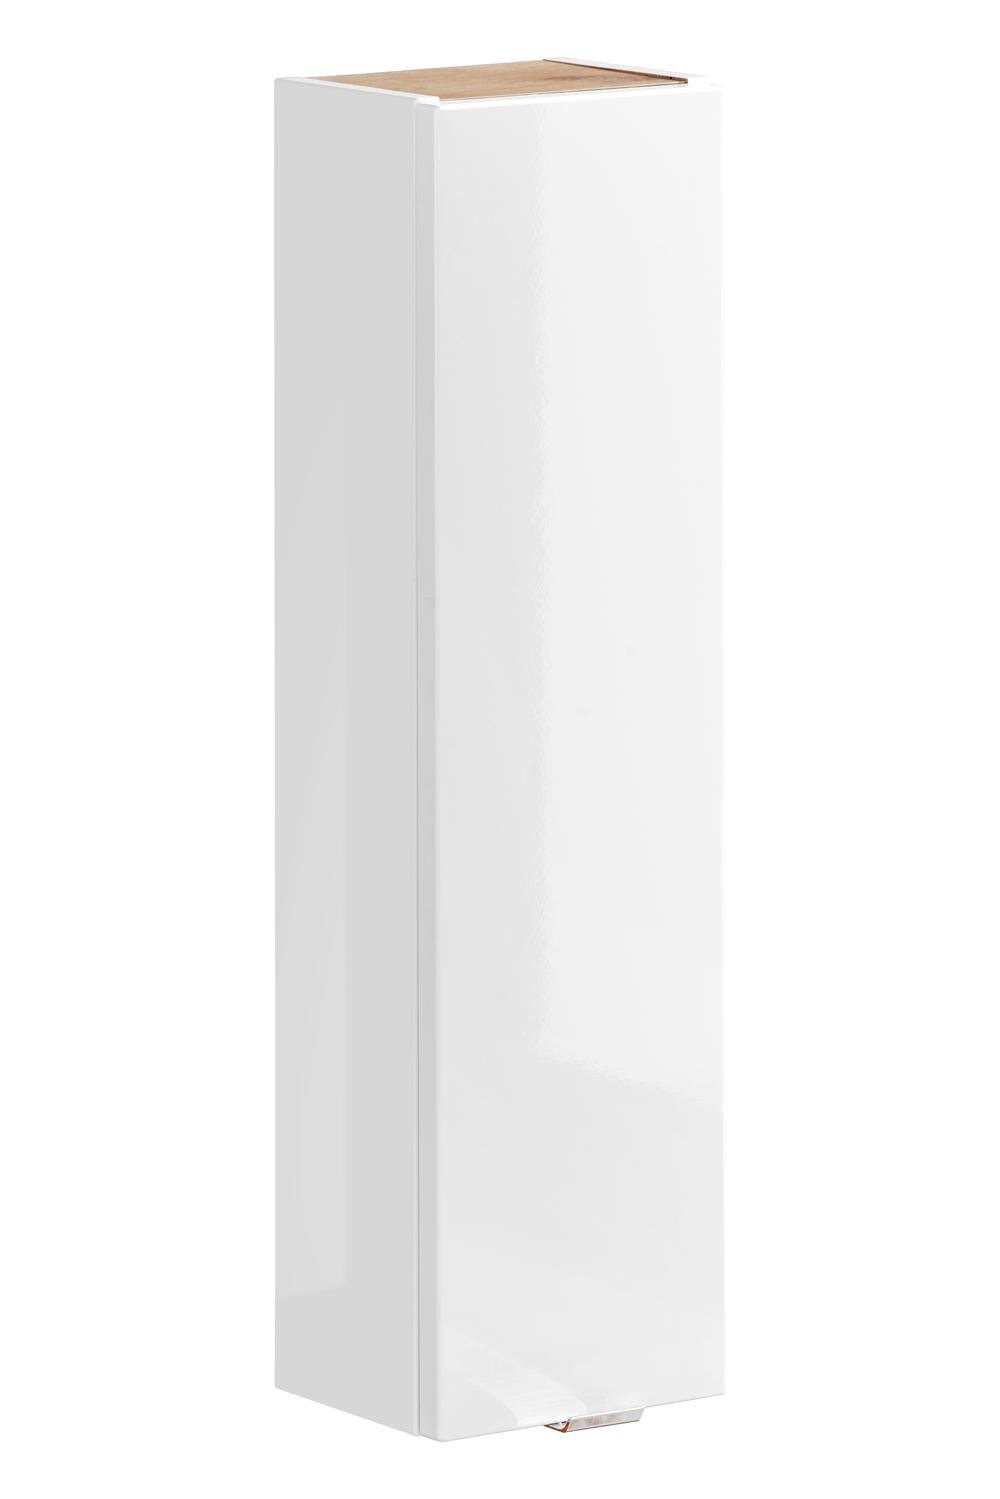 Vonios spintelė COMAD CAPRI WHITE 830B FSC, balta